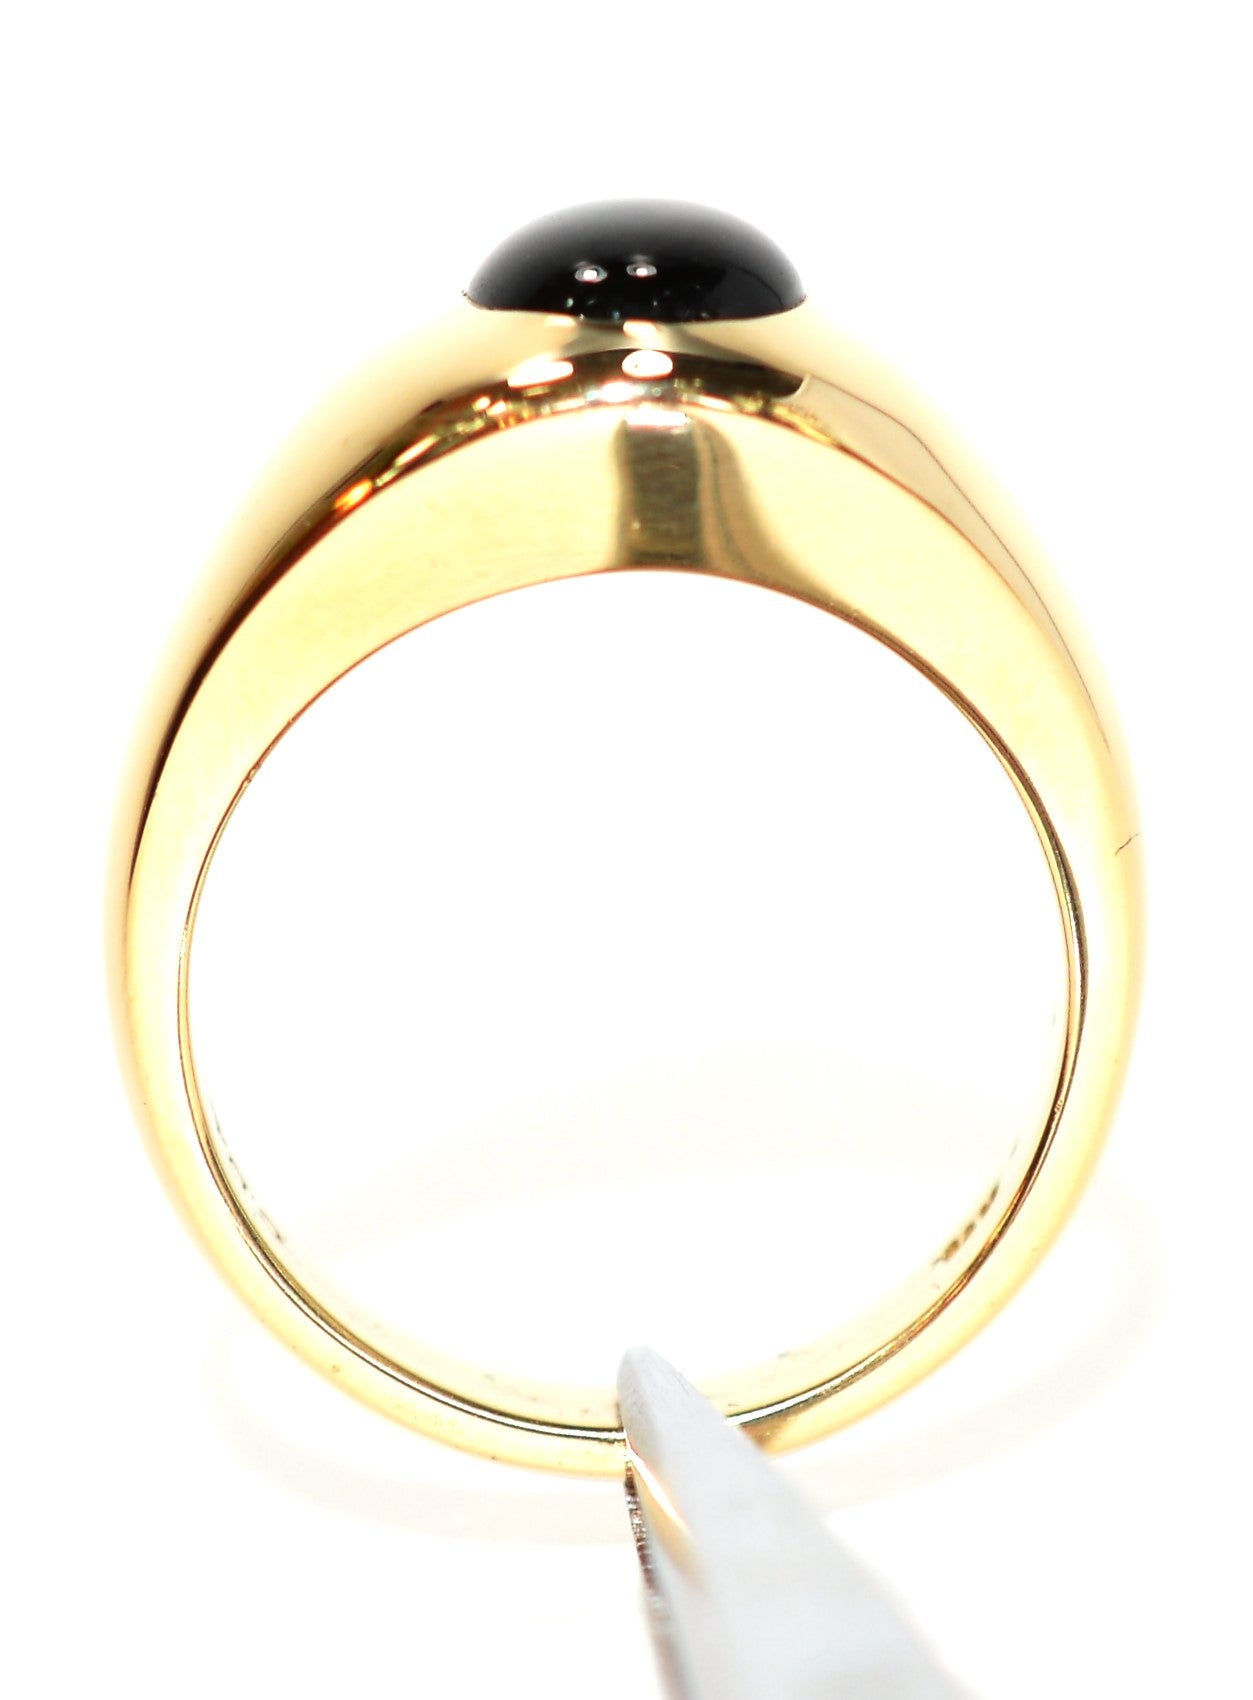 Natural Star Sapphire Ring 14K Solid Gold 2.62ct Gemstone Ring Men's Ring Birthstone Ring Statement Ring Cocktail Ring Vintage Ring Estate